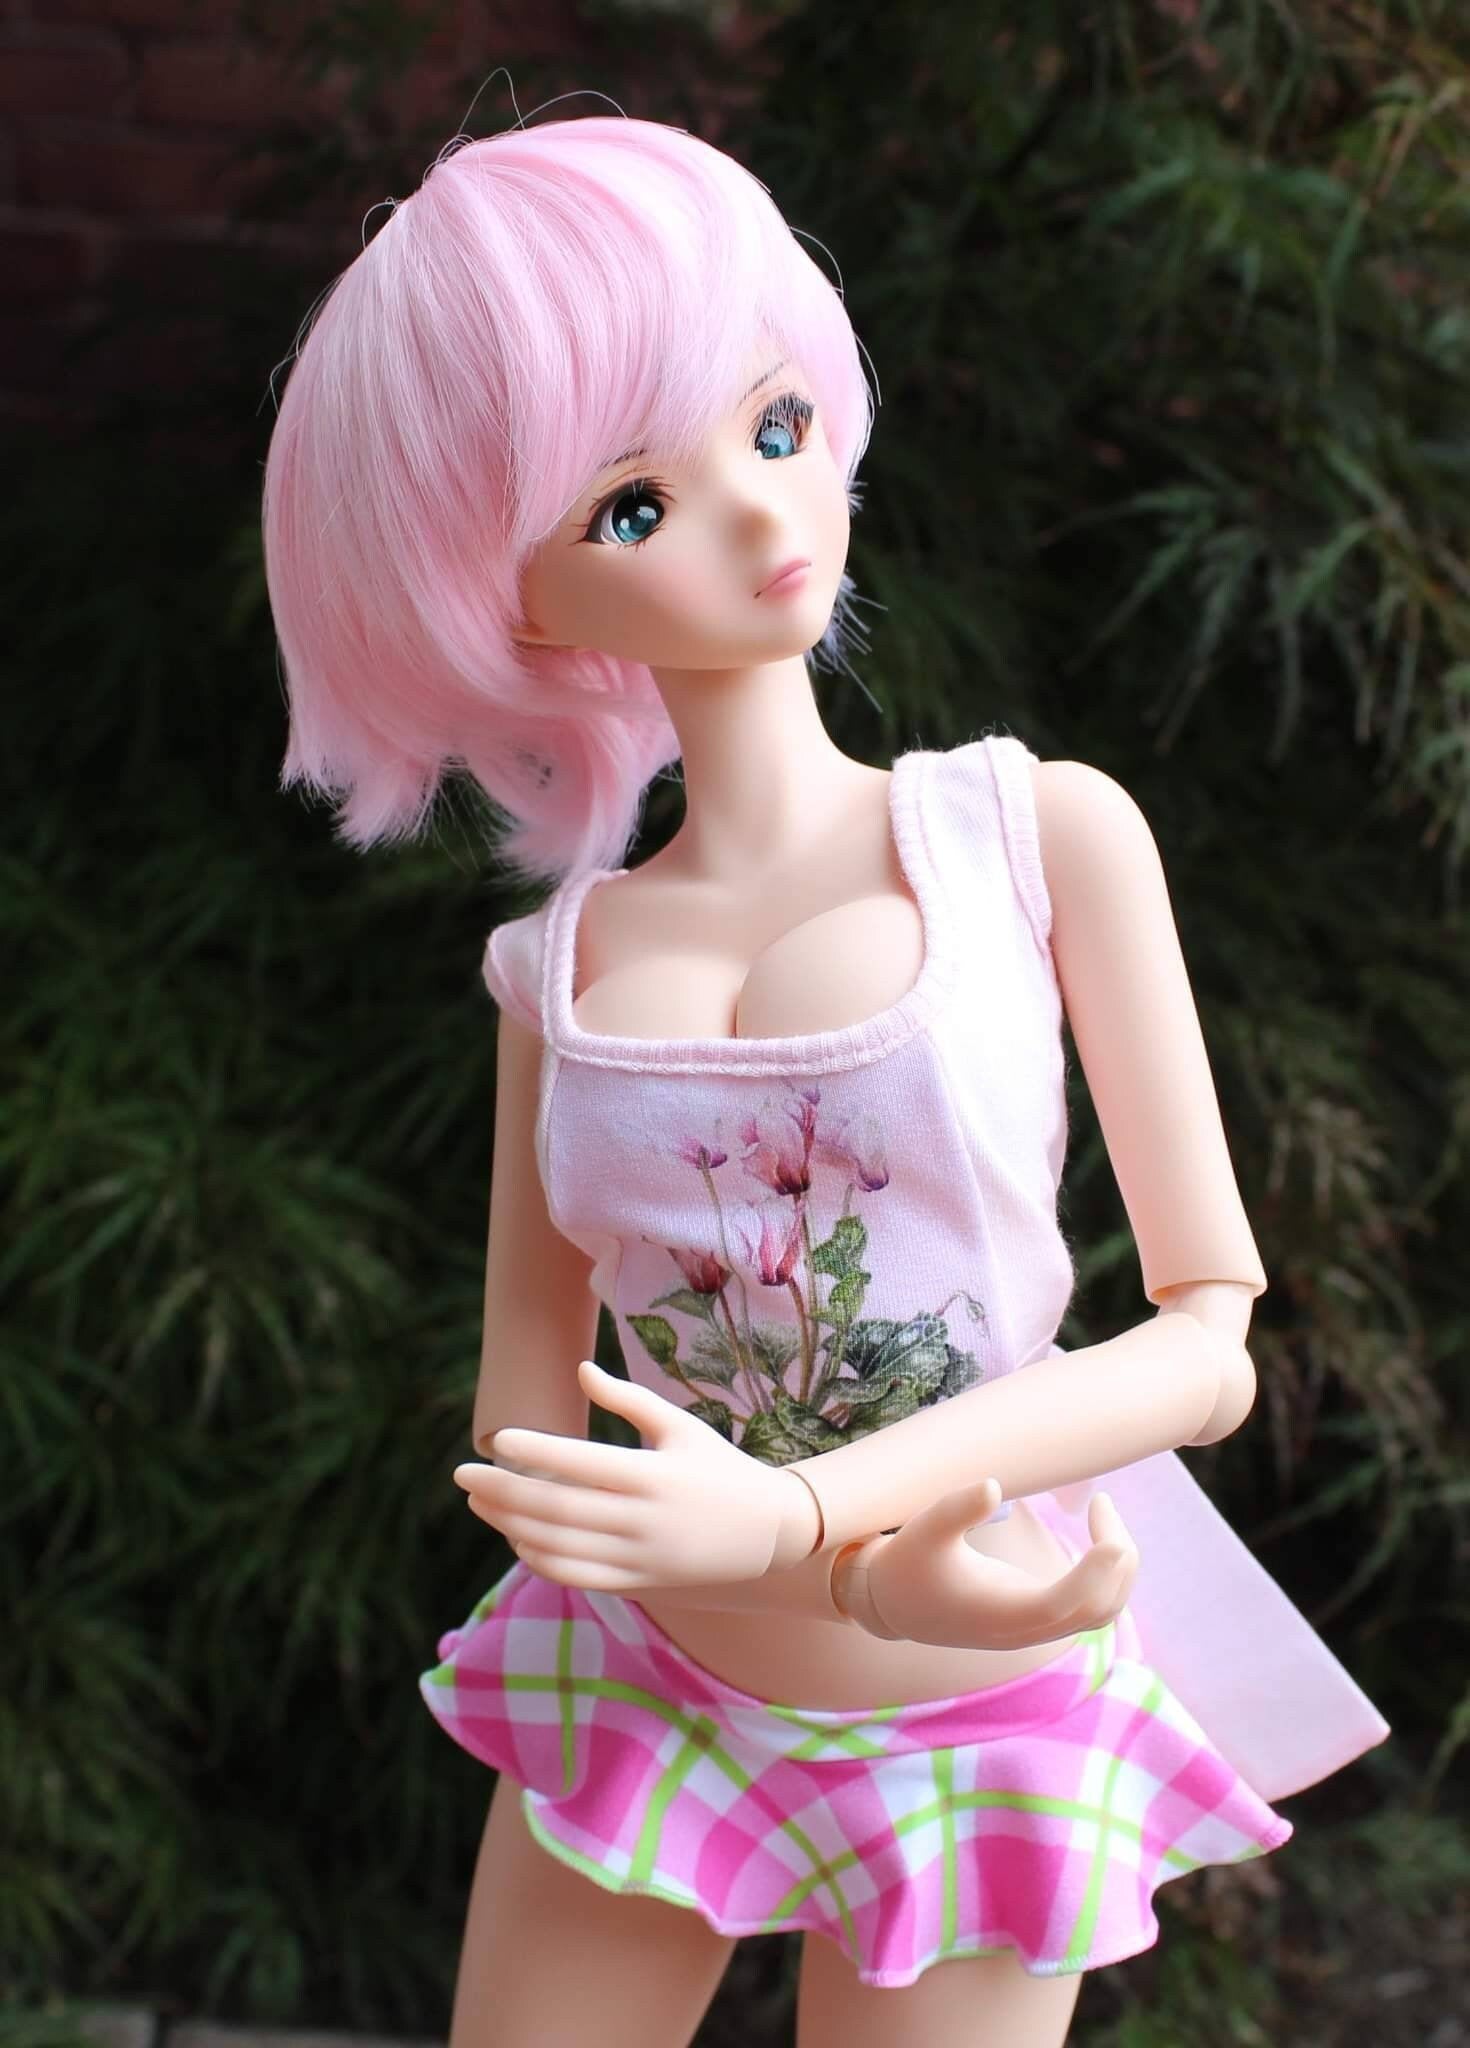 Custom doll Wig for Smart Dolls- Heat Safe - Tangle Resistant- 8.5" head size of Bjd, SD, Dollfie Dream dolls Pink pixie